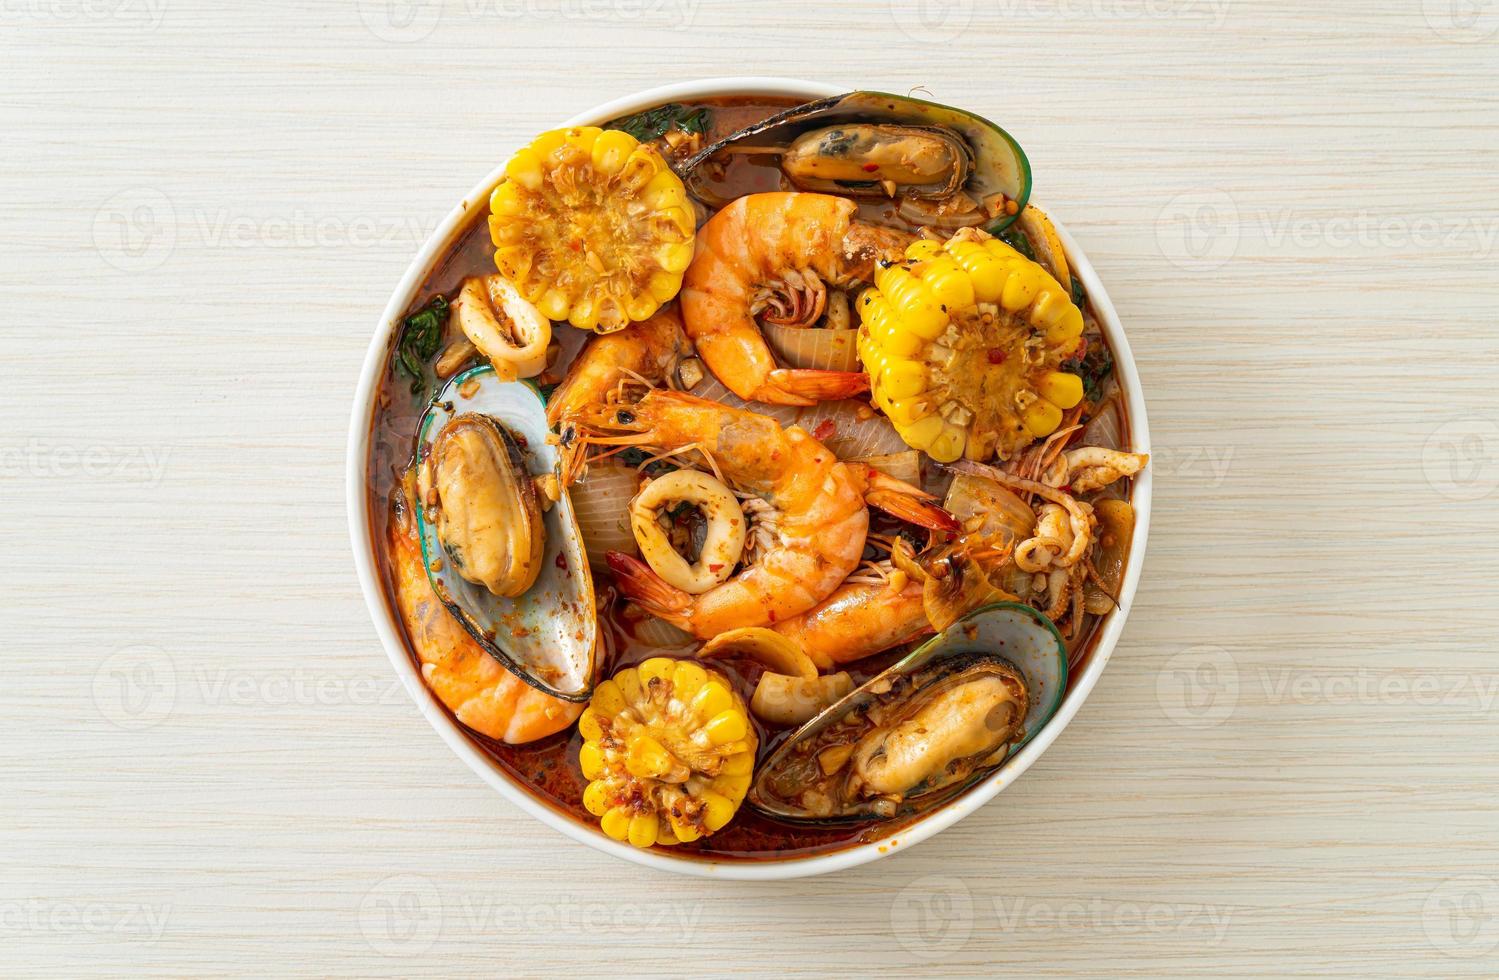 pesce piccante barbecue - gamberi, calamari, cozze foto